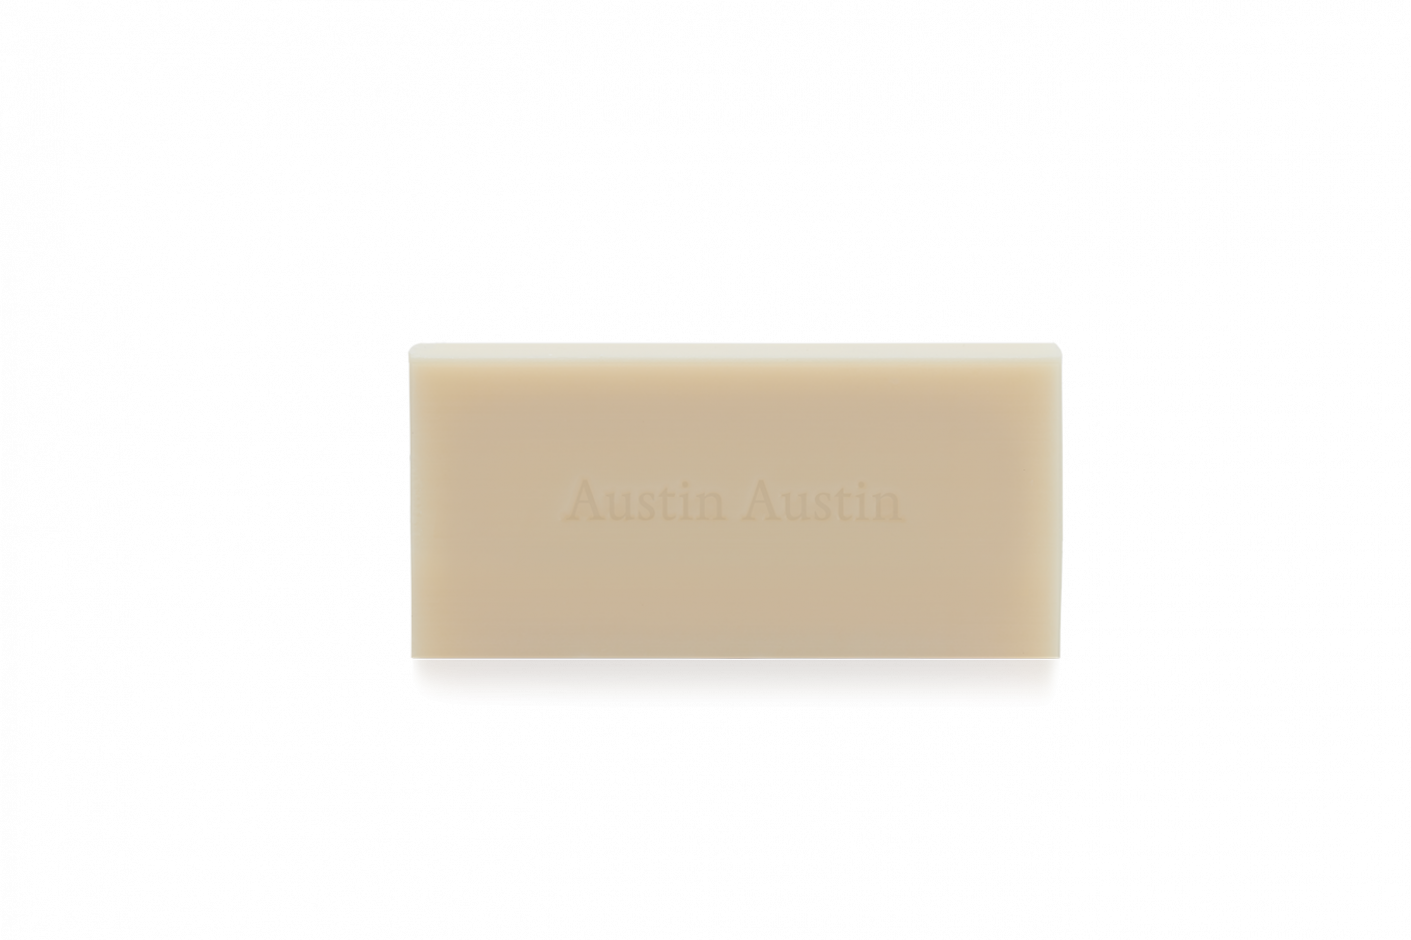 Rectangular cream coloured soap with Austin Austin printed